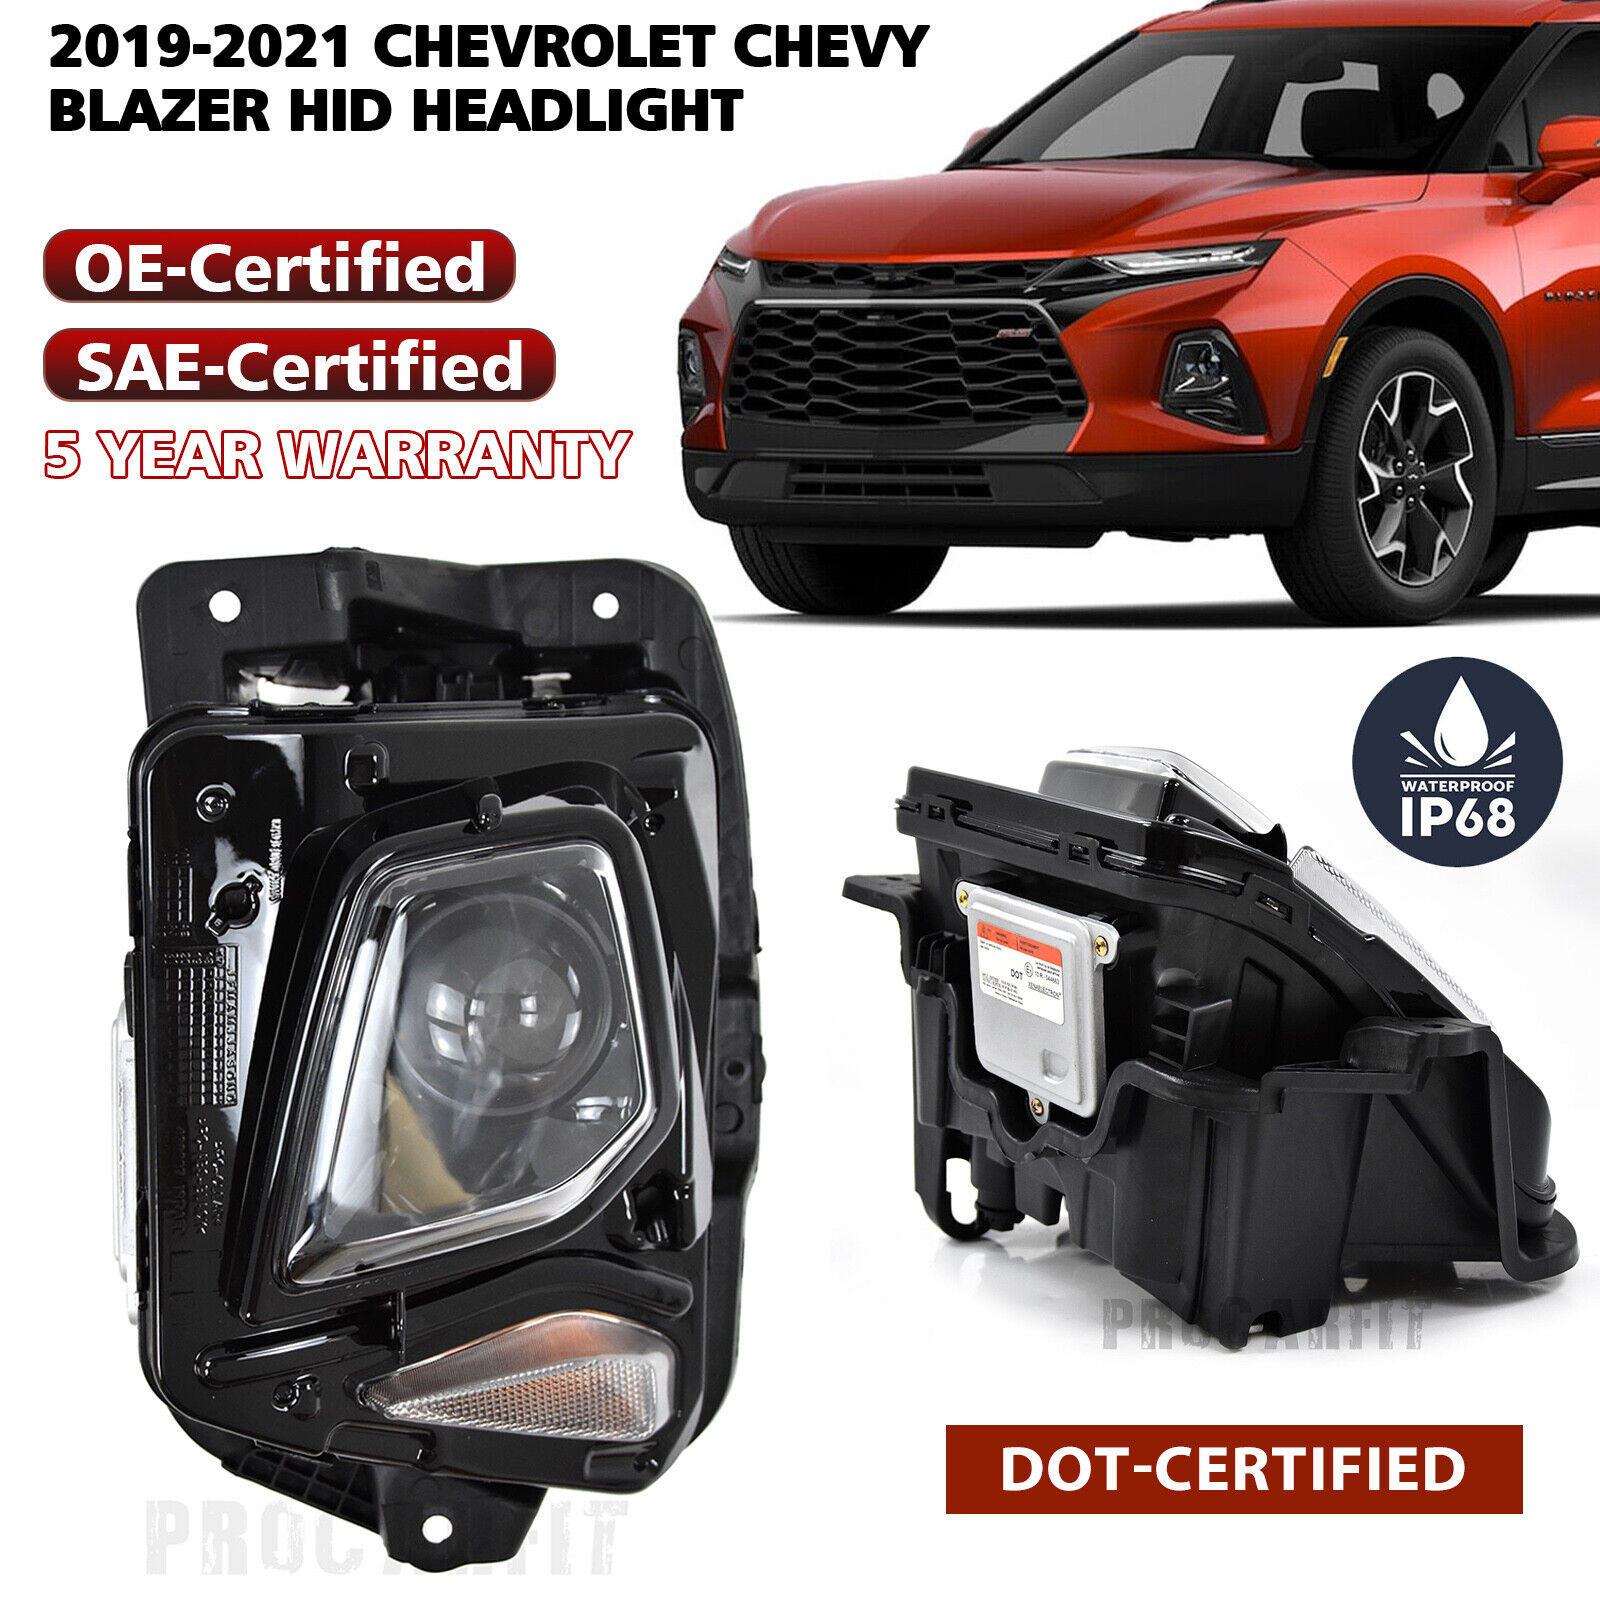 2019 2020 2021 Chevrolet Chevy Blazer HID Headlight Headlamp Assembly Left Side